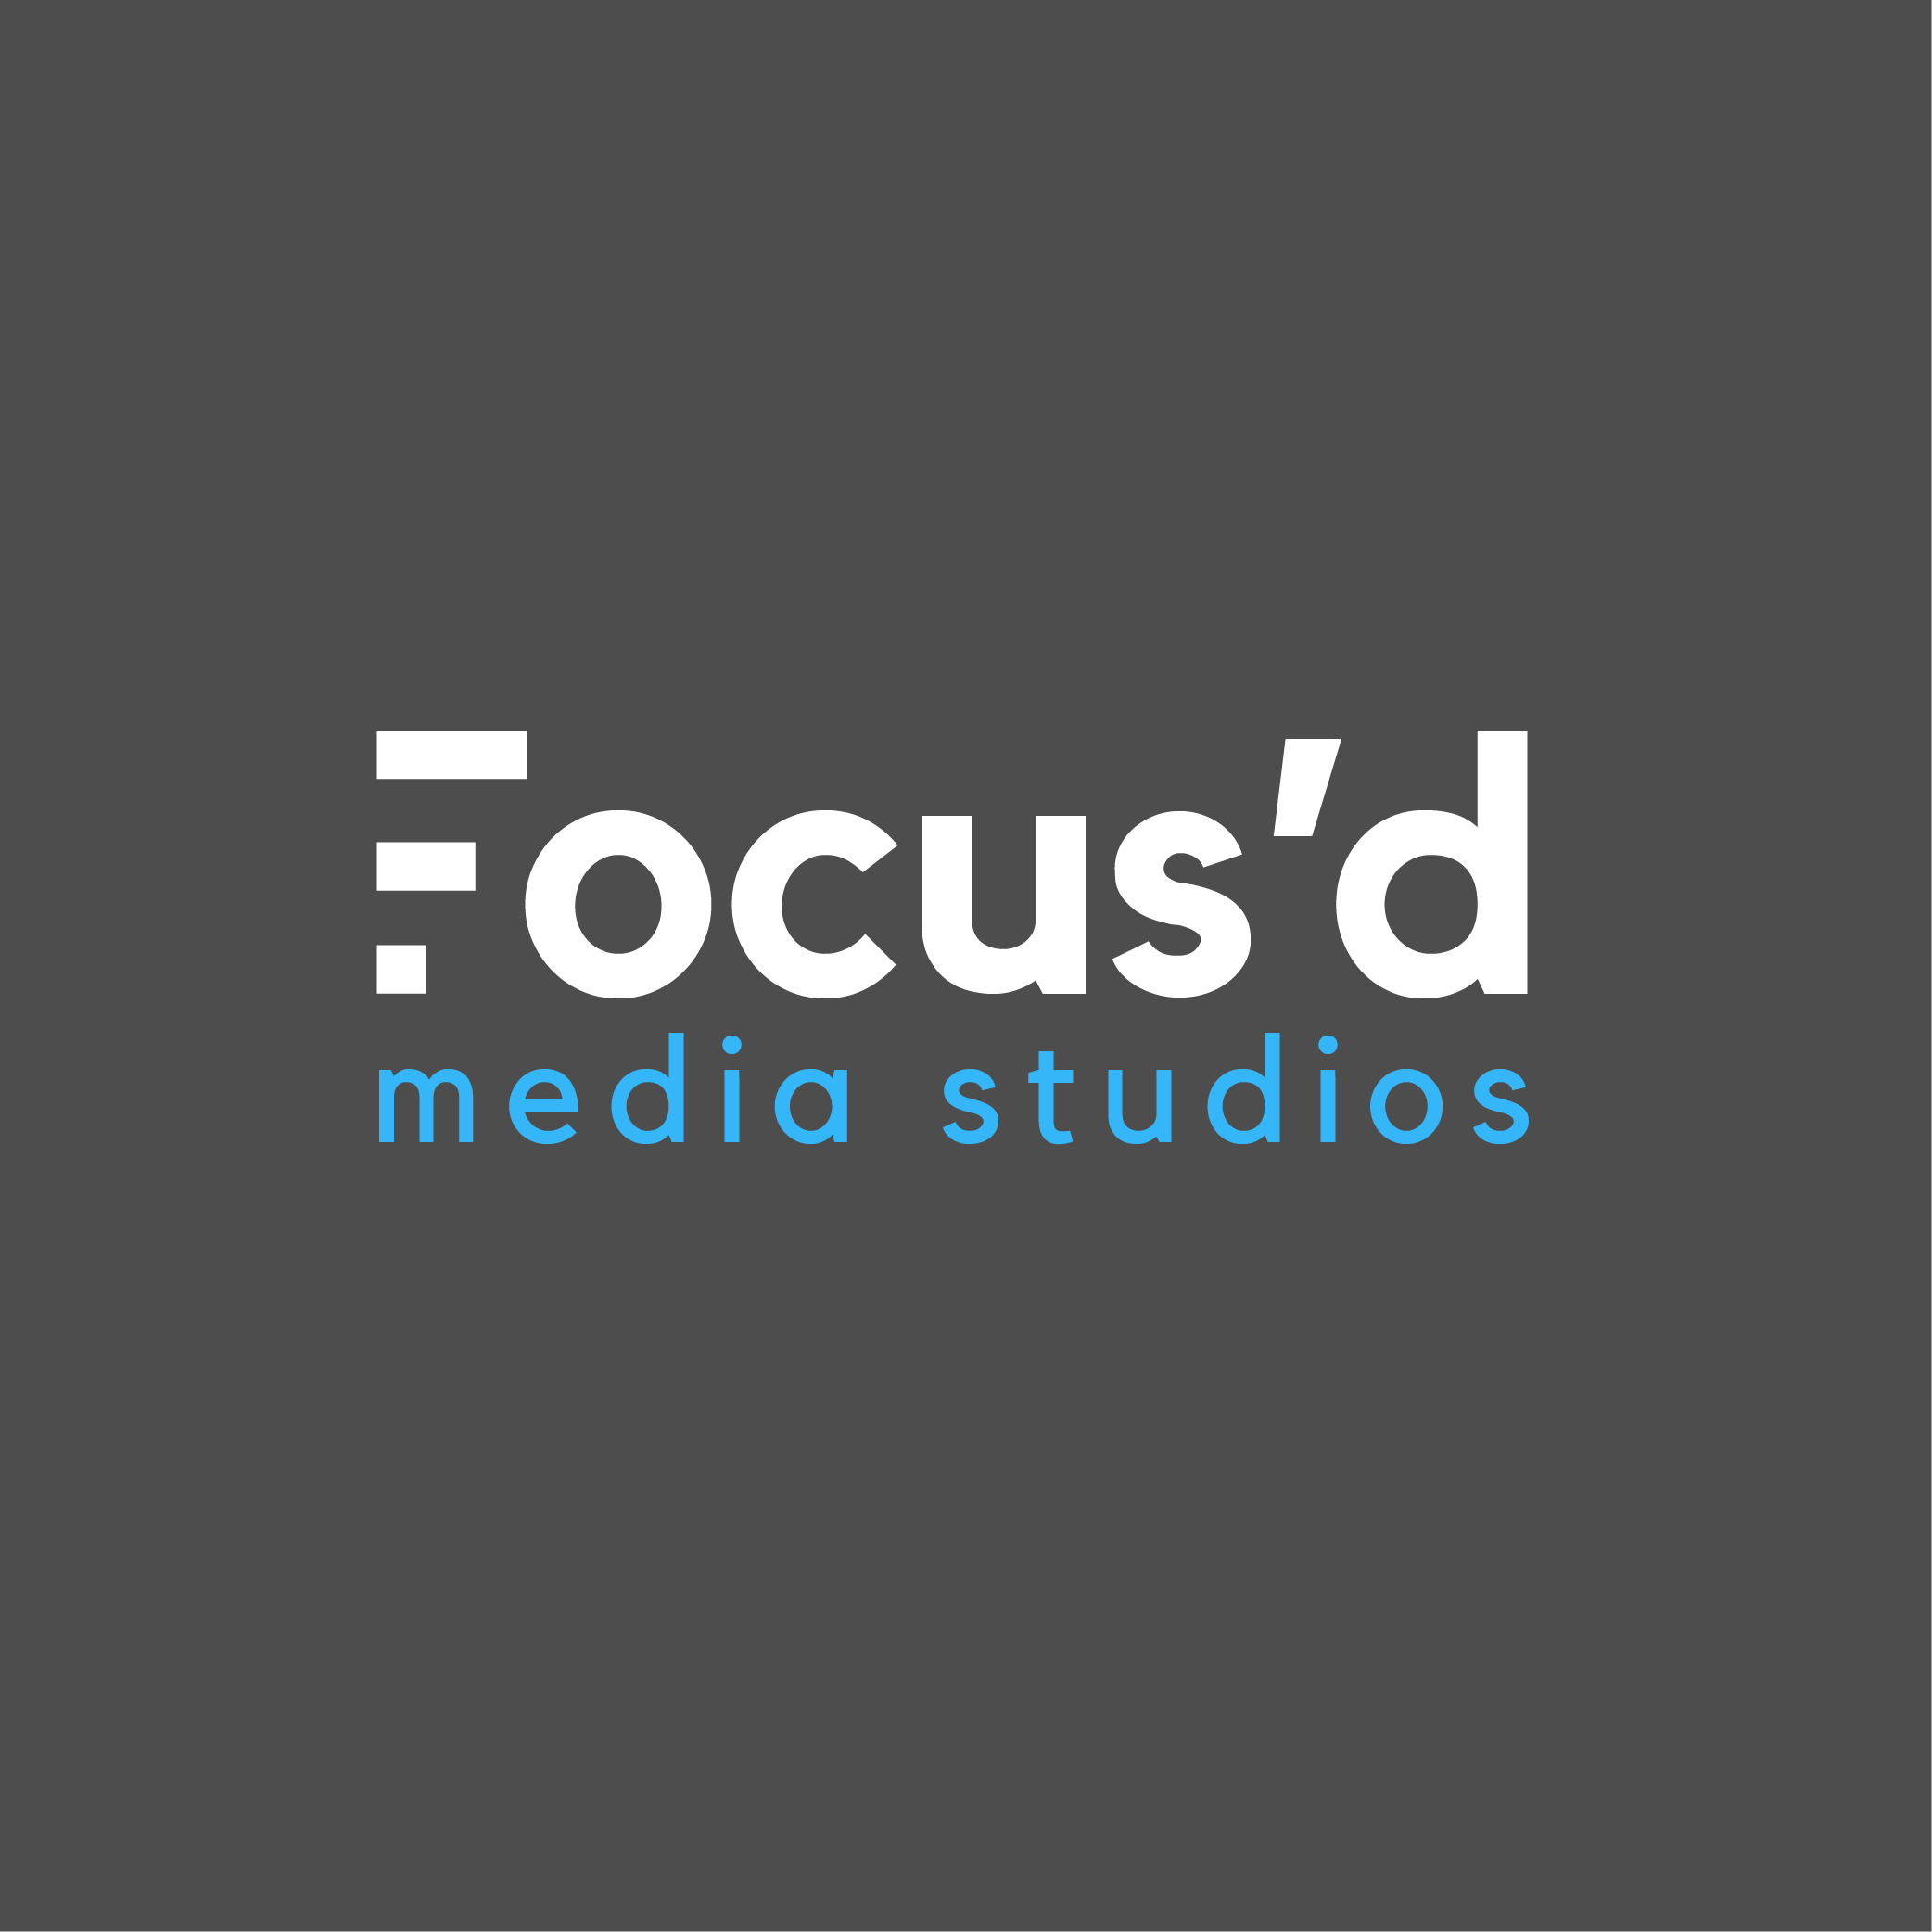 focusd-media-studios